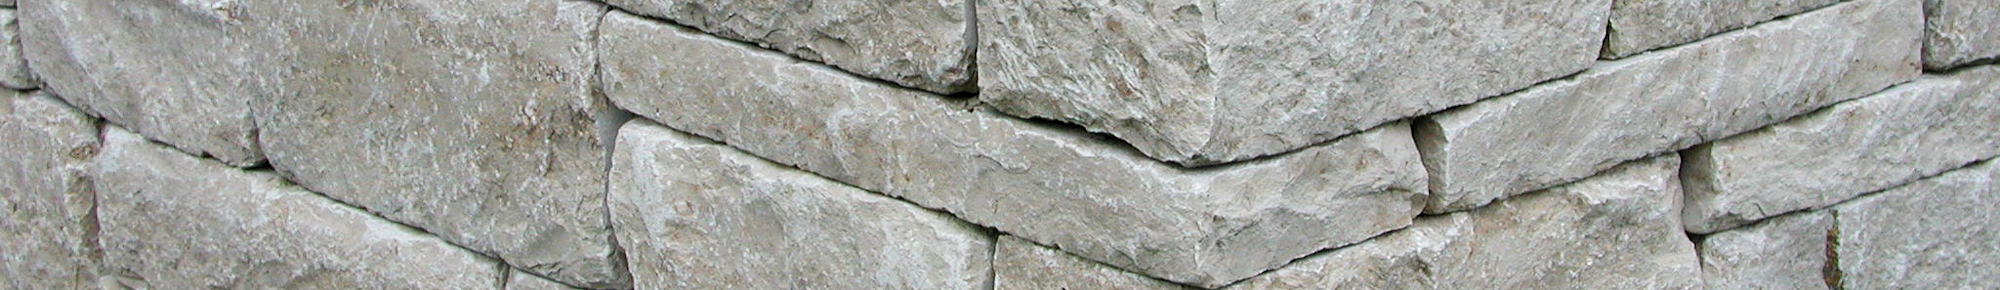 Natural stone heading